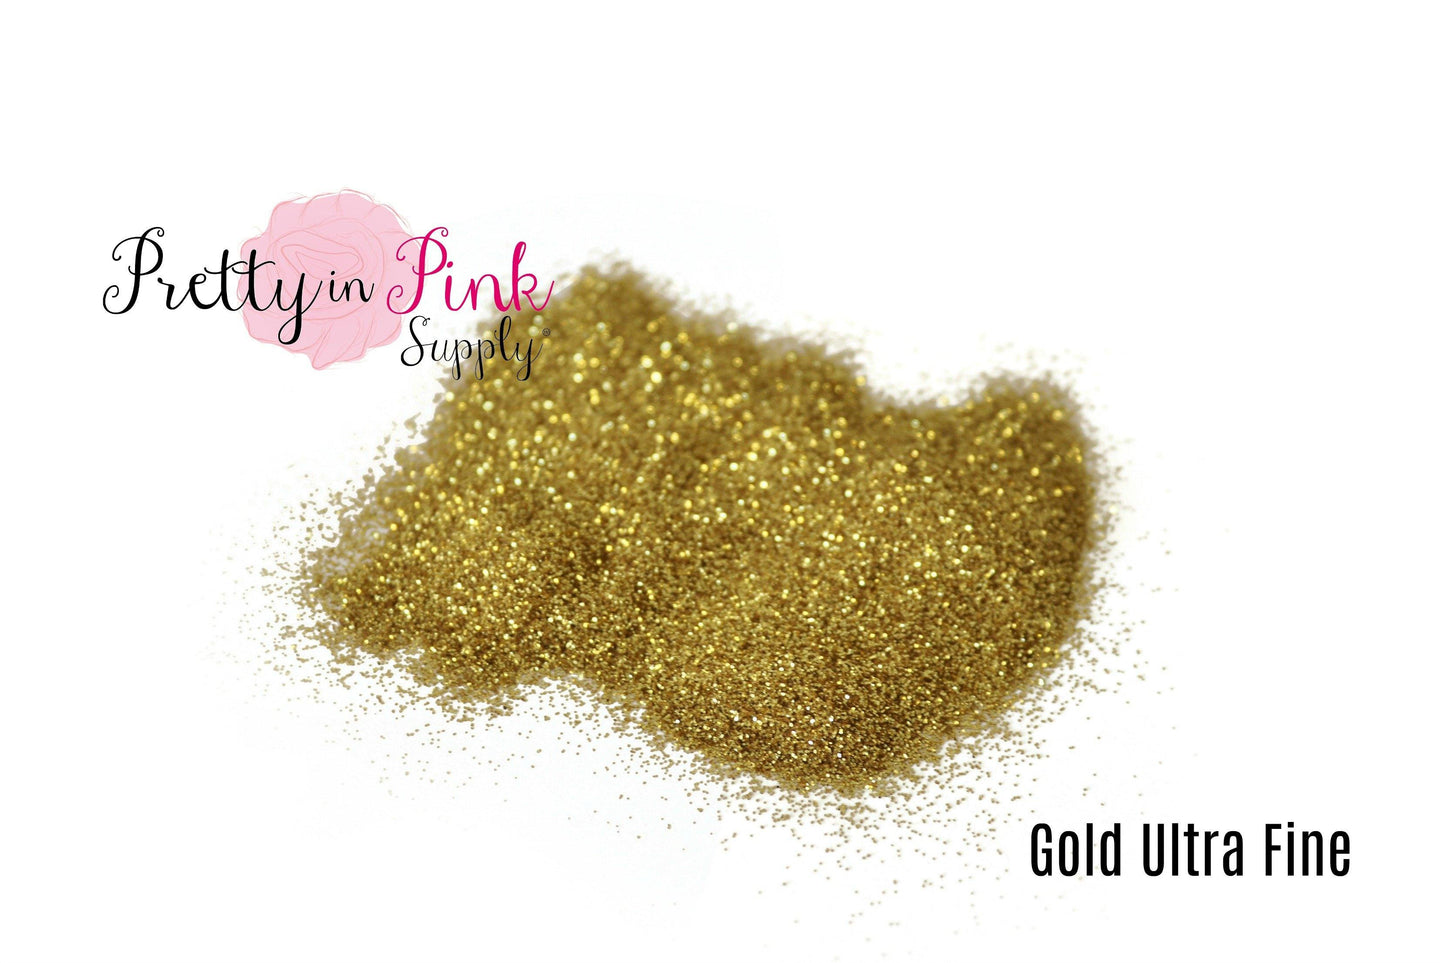 Gold Ultra Fine Glitter - Pretty in Pink Supply